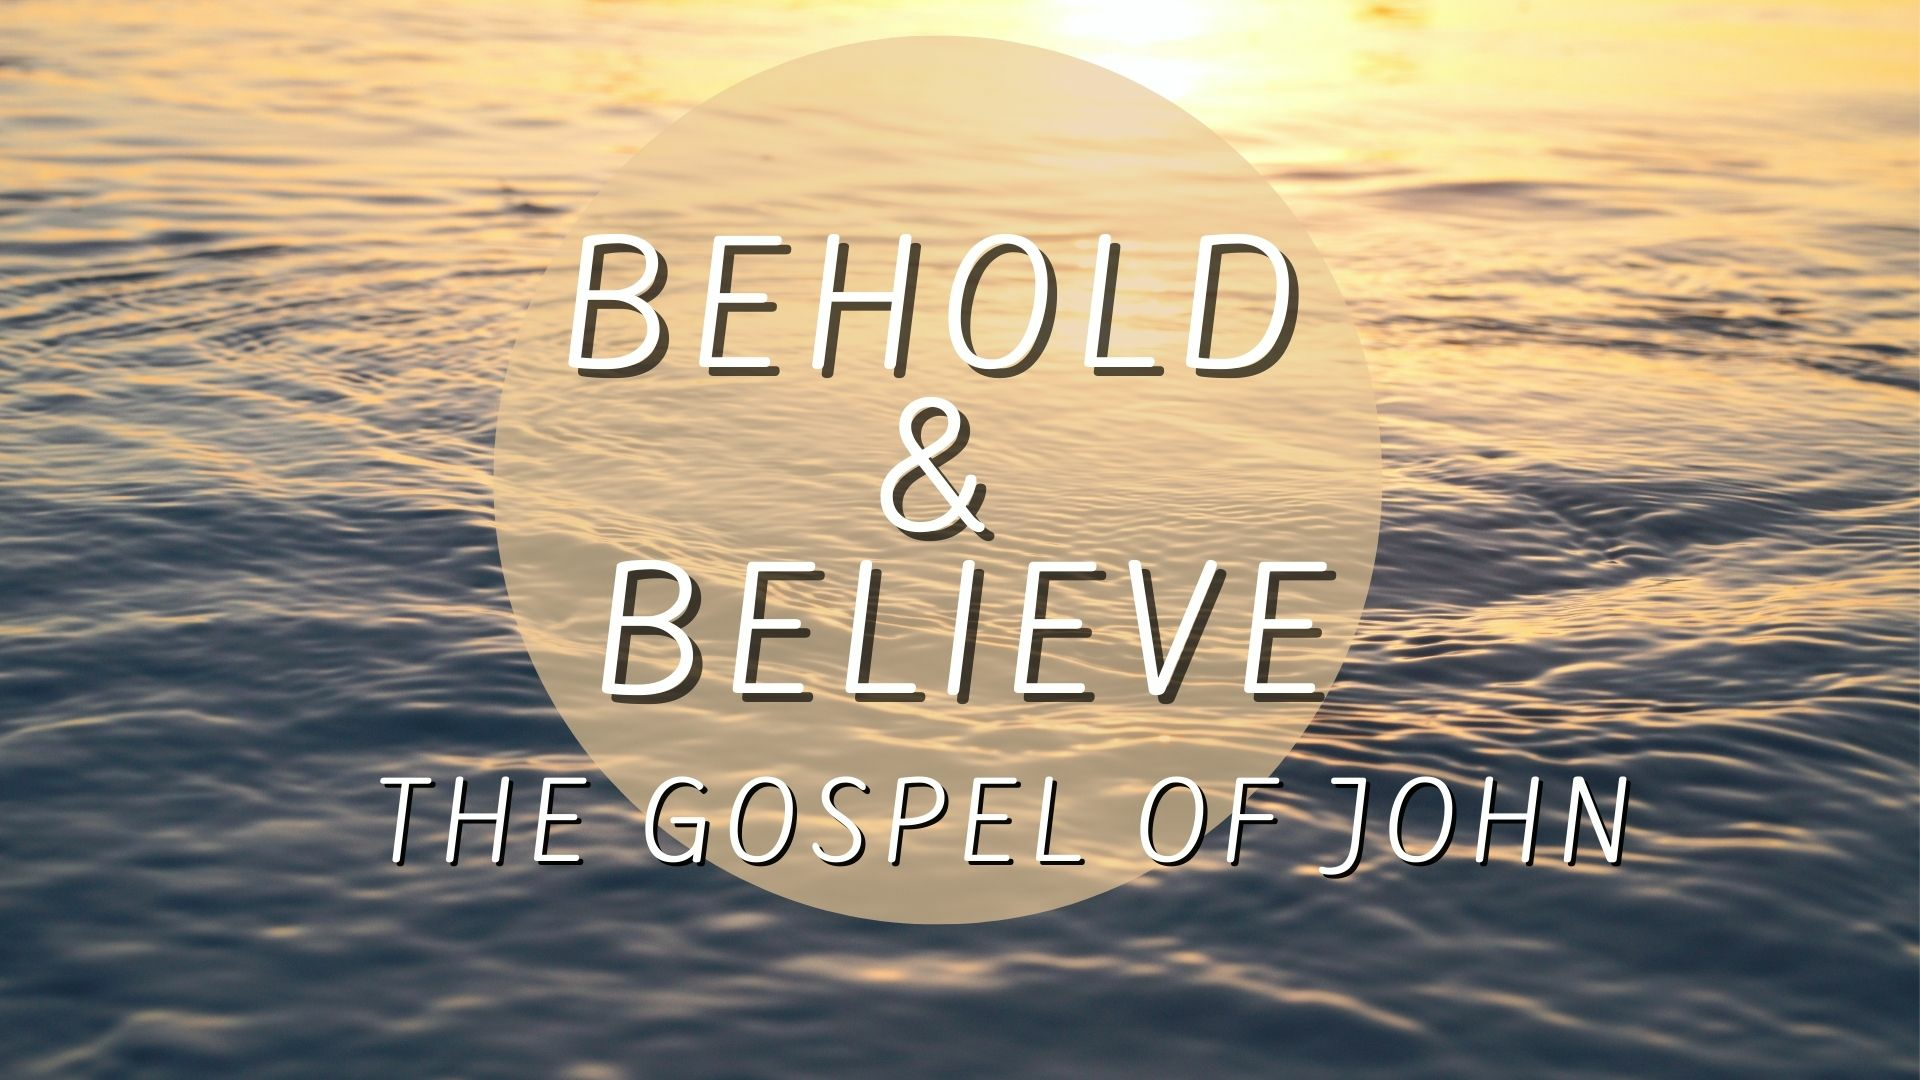 The Gospel of John : Behold & Believe